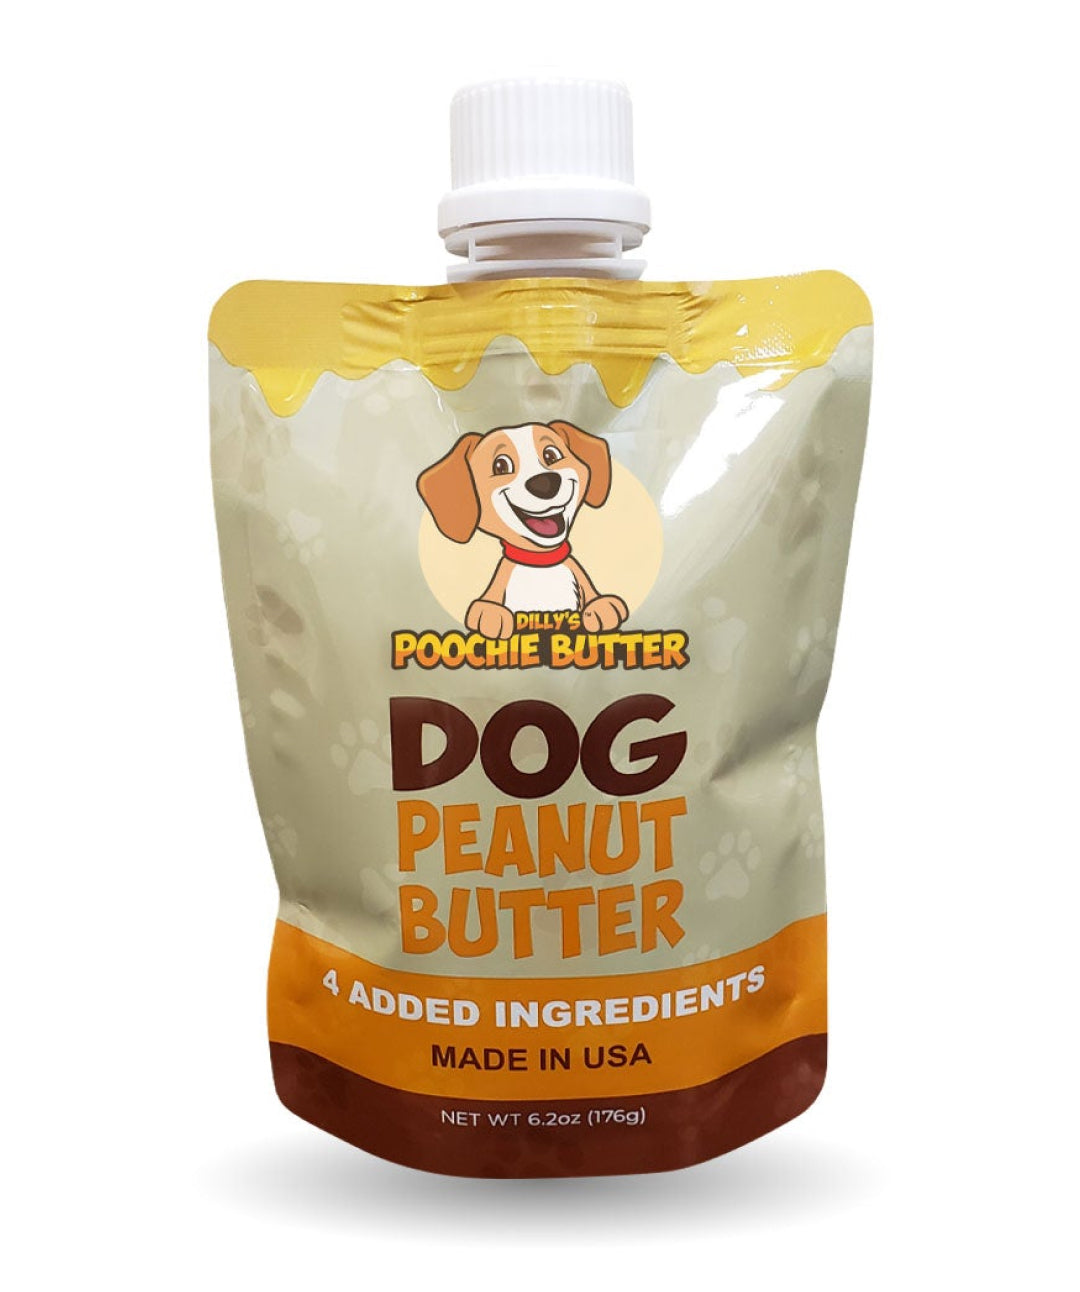 Poochie Butter Peanut Butter Dog Treat